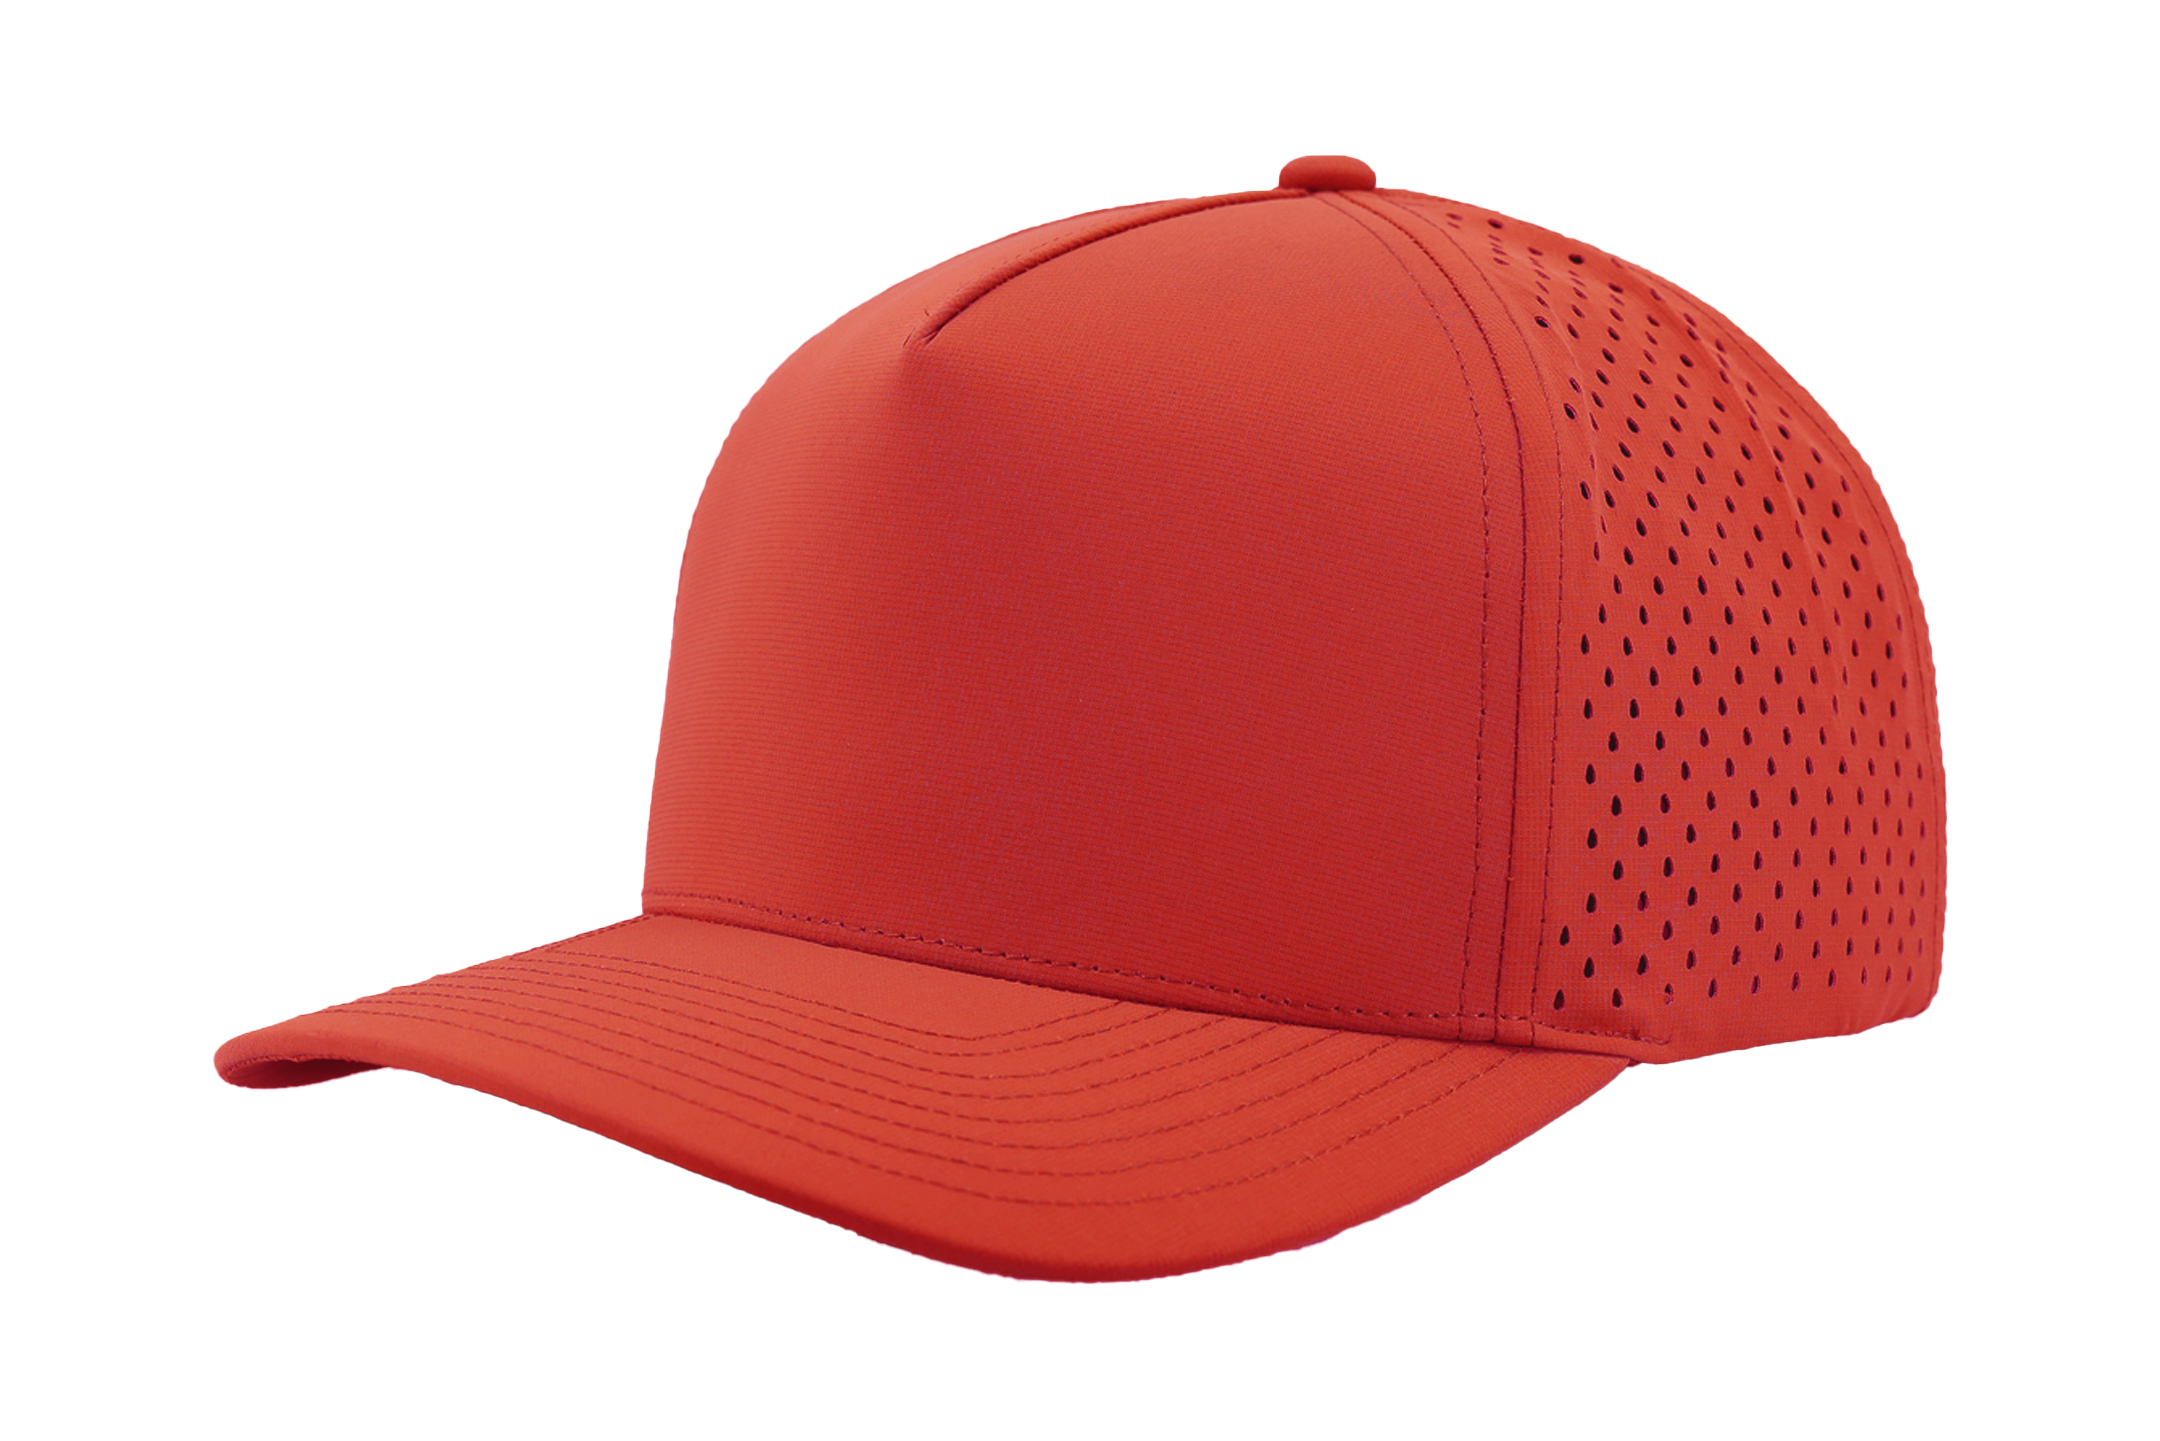 Blackhawk hat | Premium custom hat panel | | 5 Zapped Repellent Headwear Water